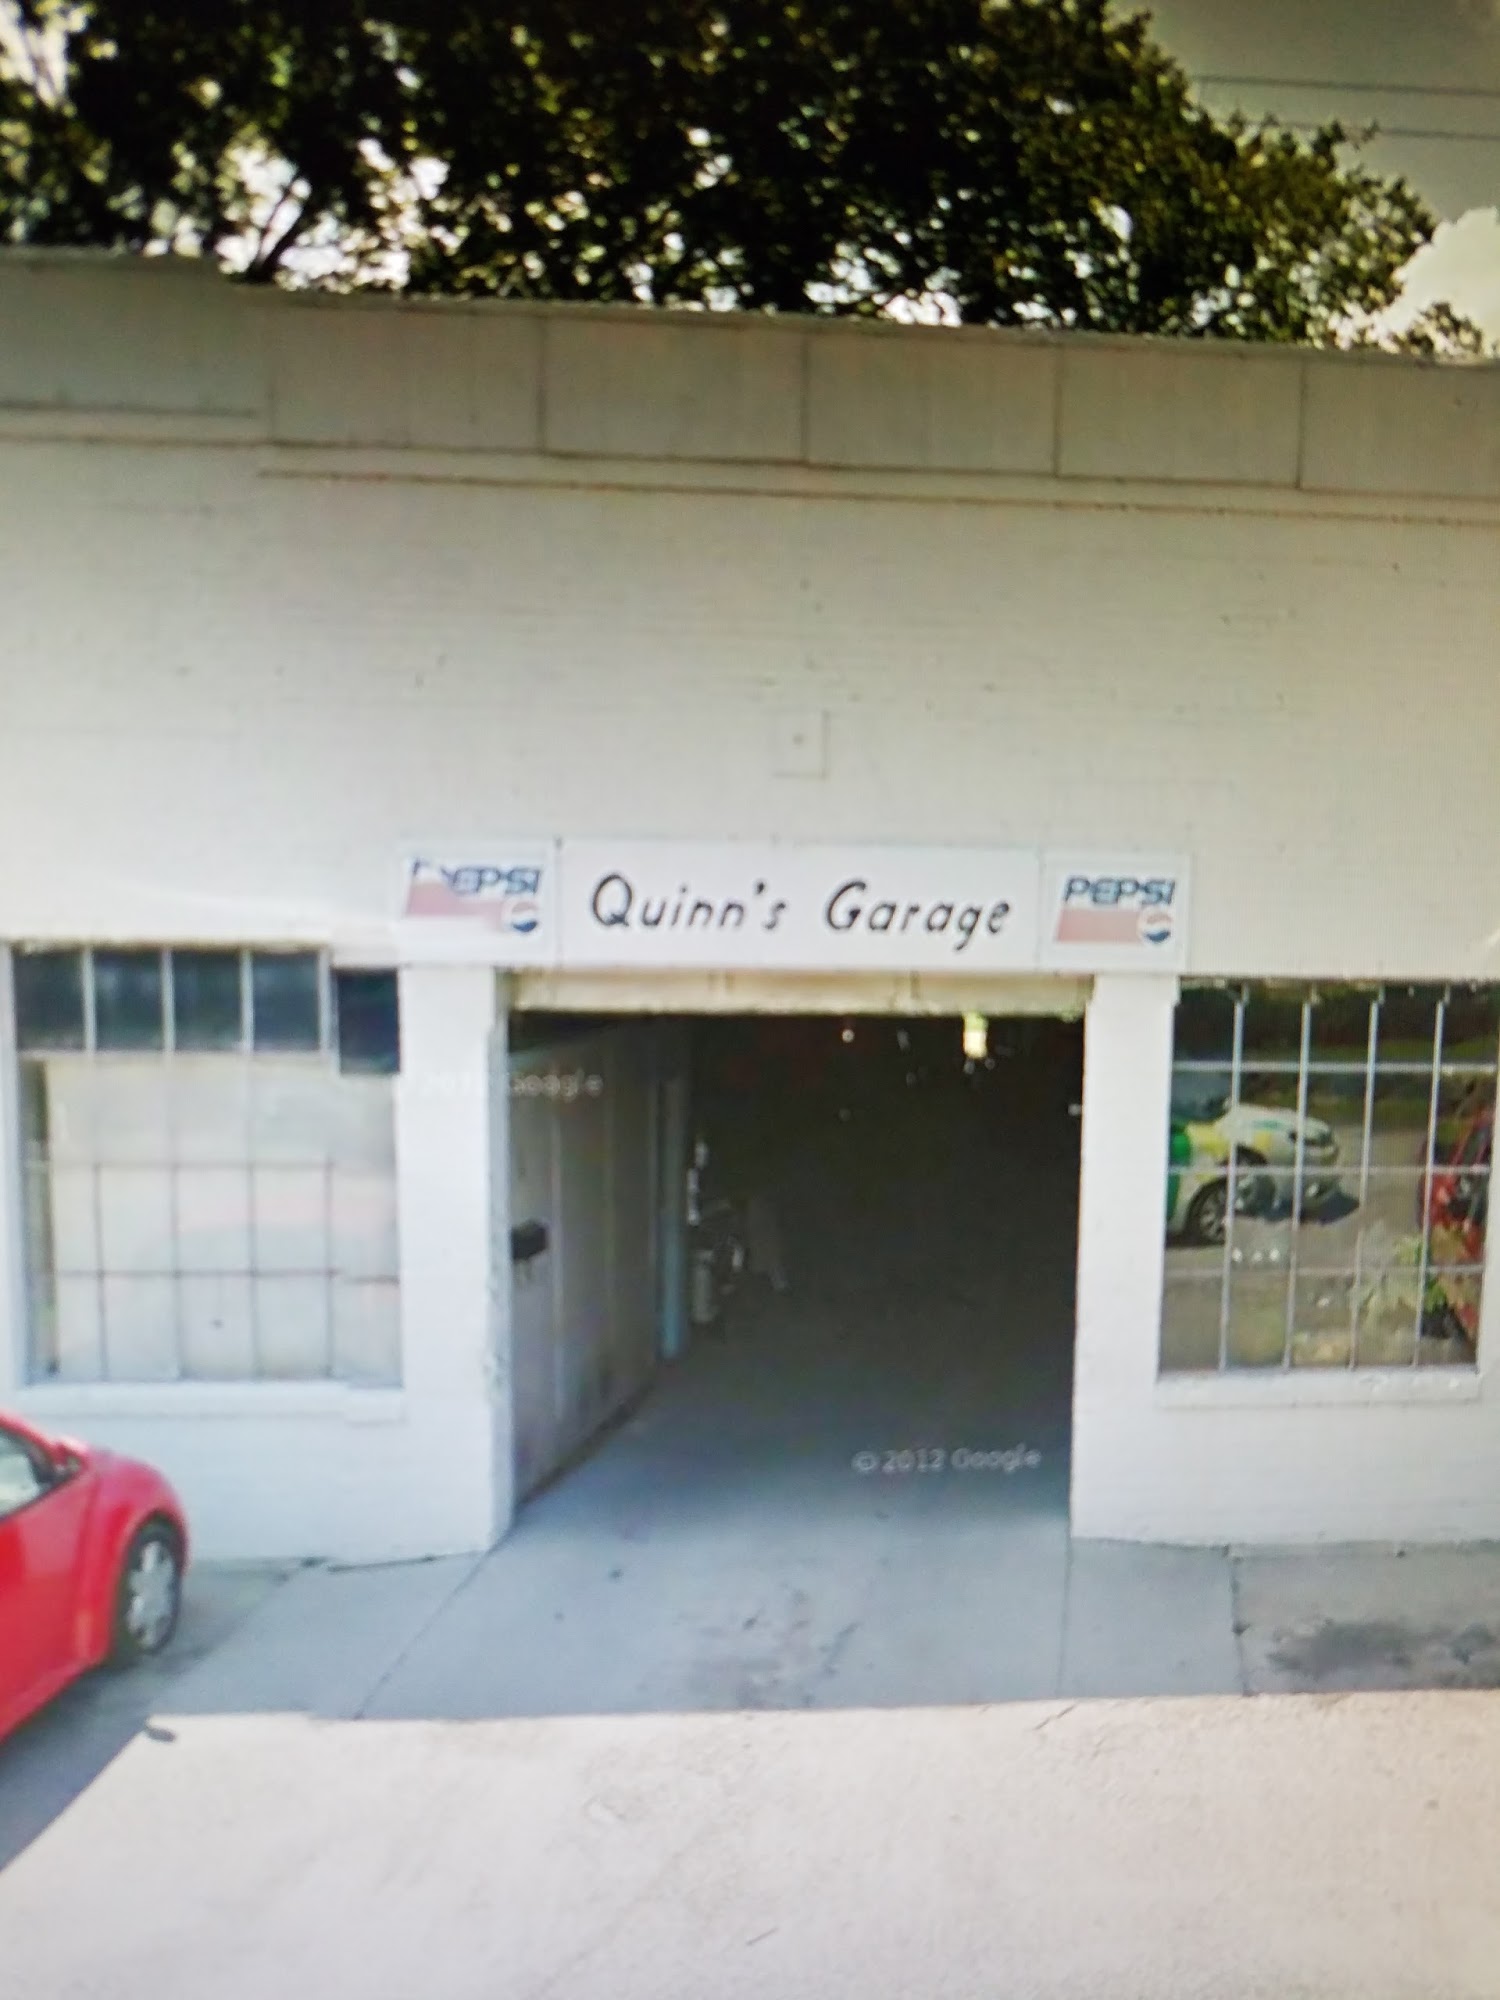 Quinn's Garage